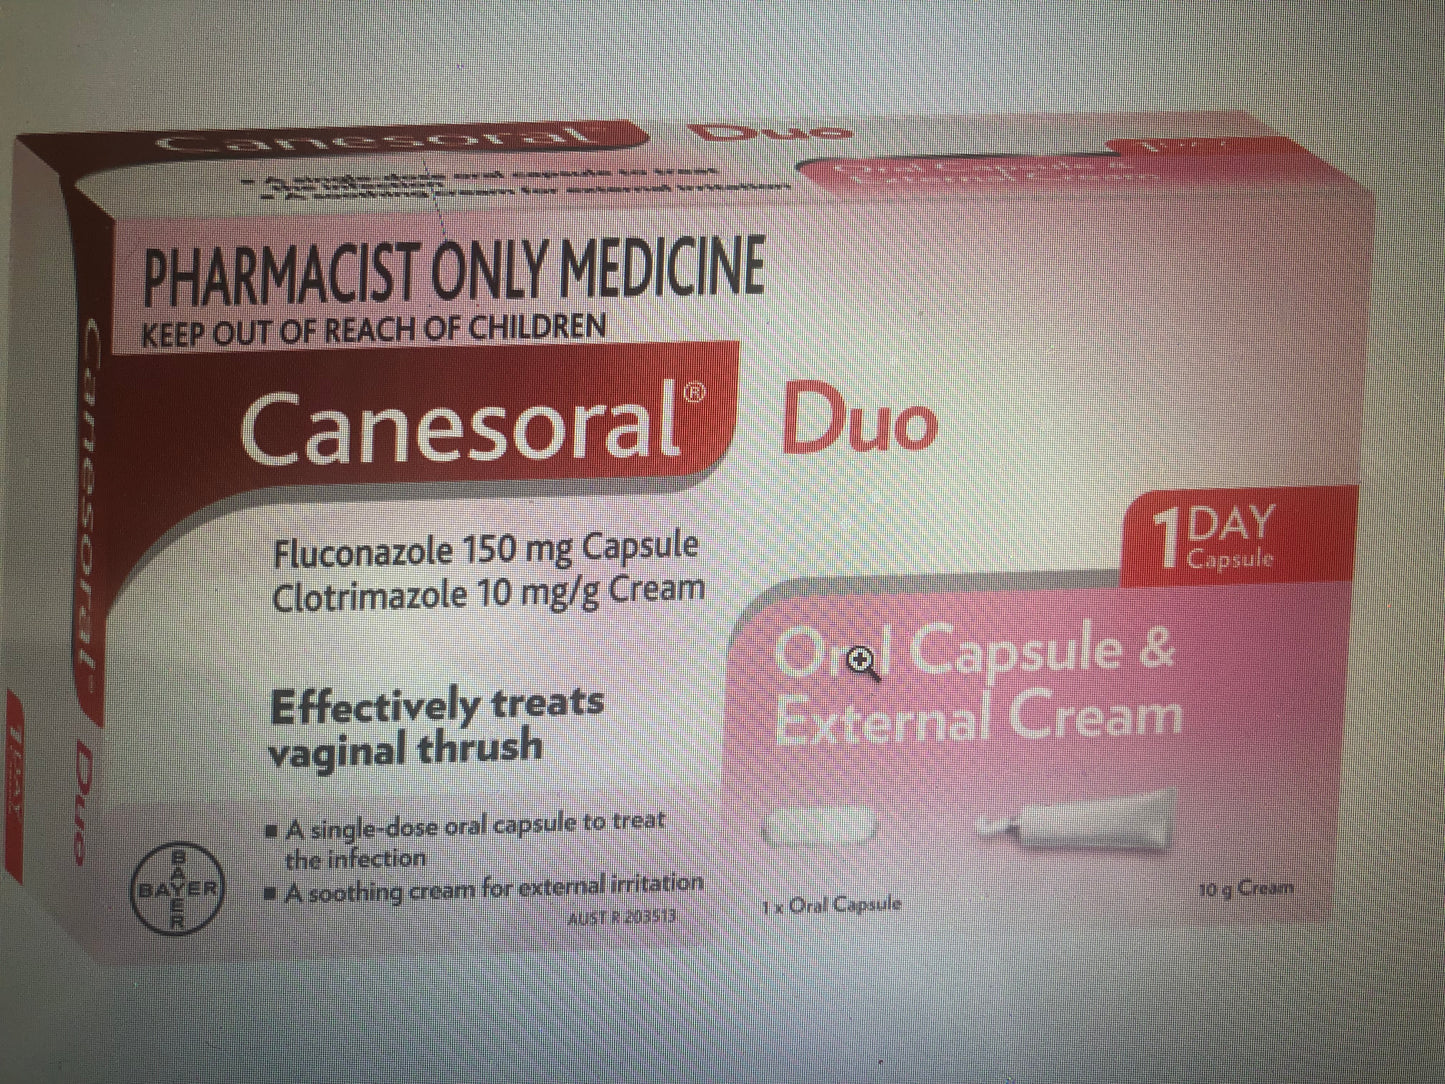 CanesOral Duo Oral Capsule + External Cream